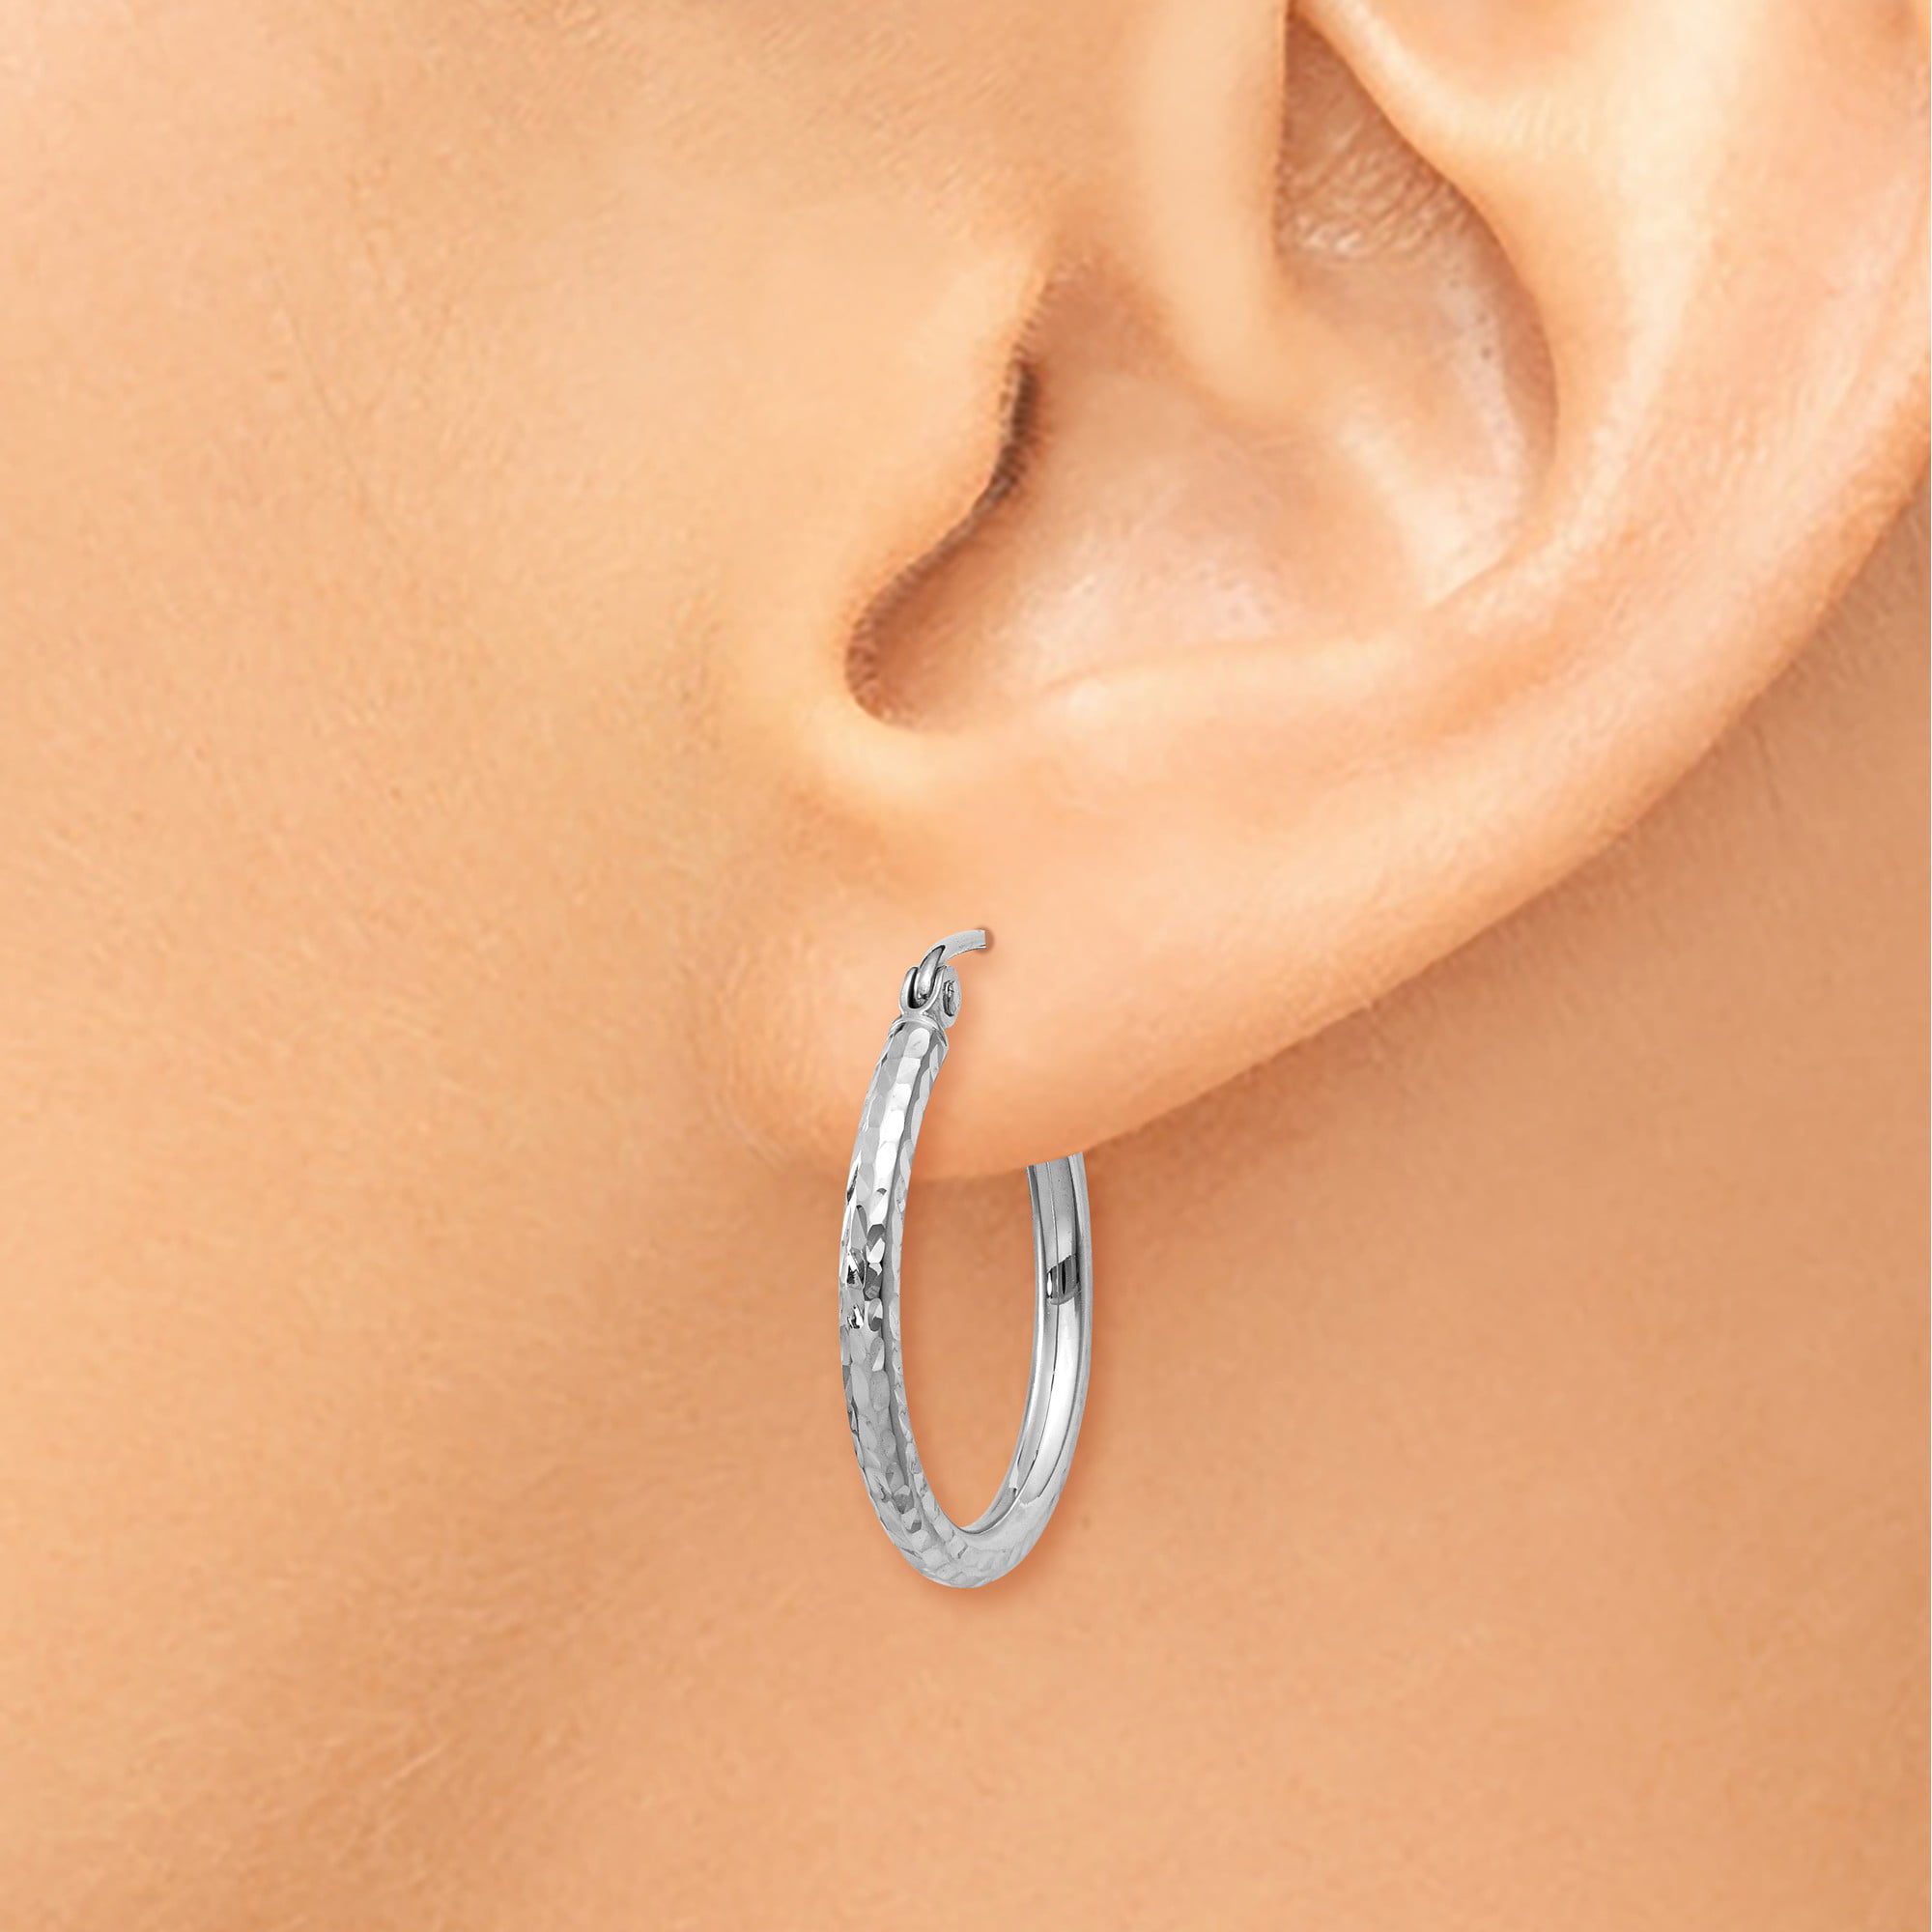 14k White Gold Dia-Cut 2mm Round Tube Hoop Earrings